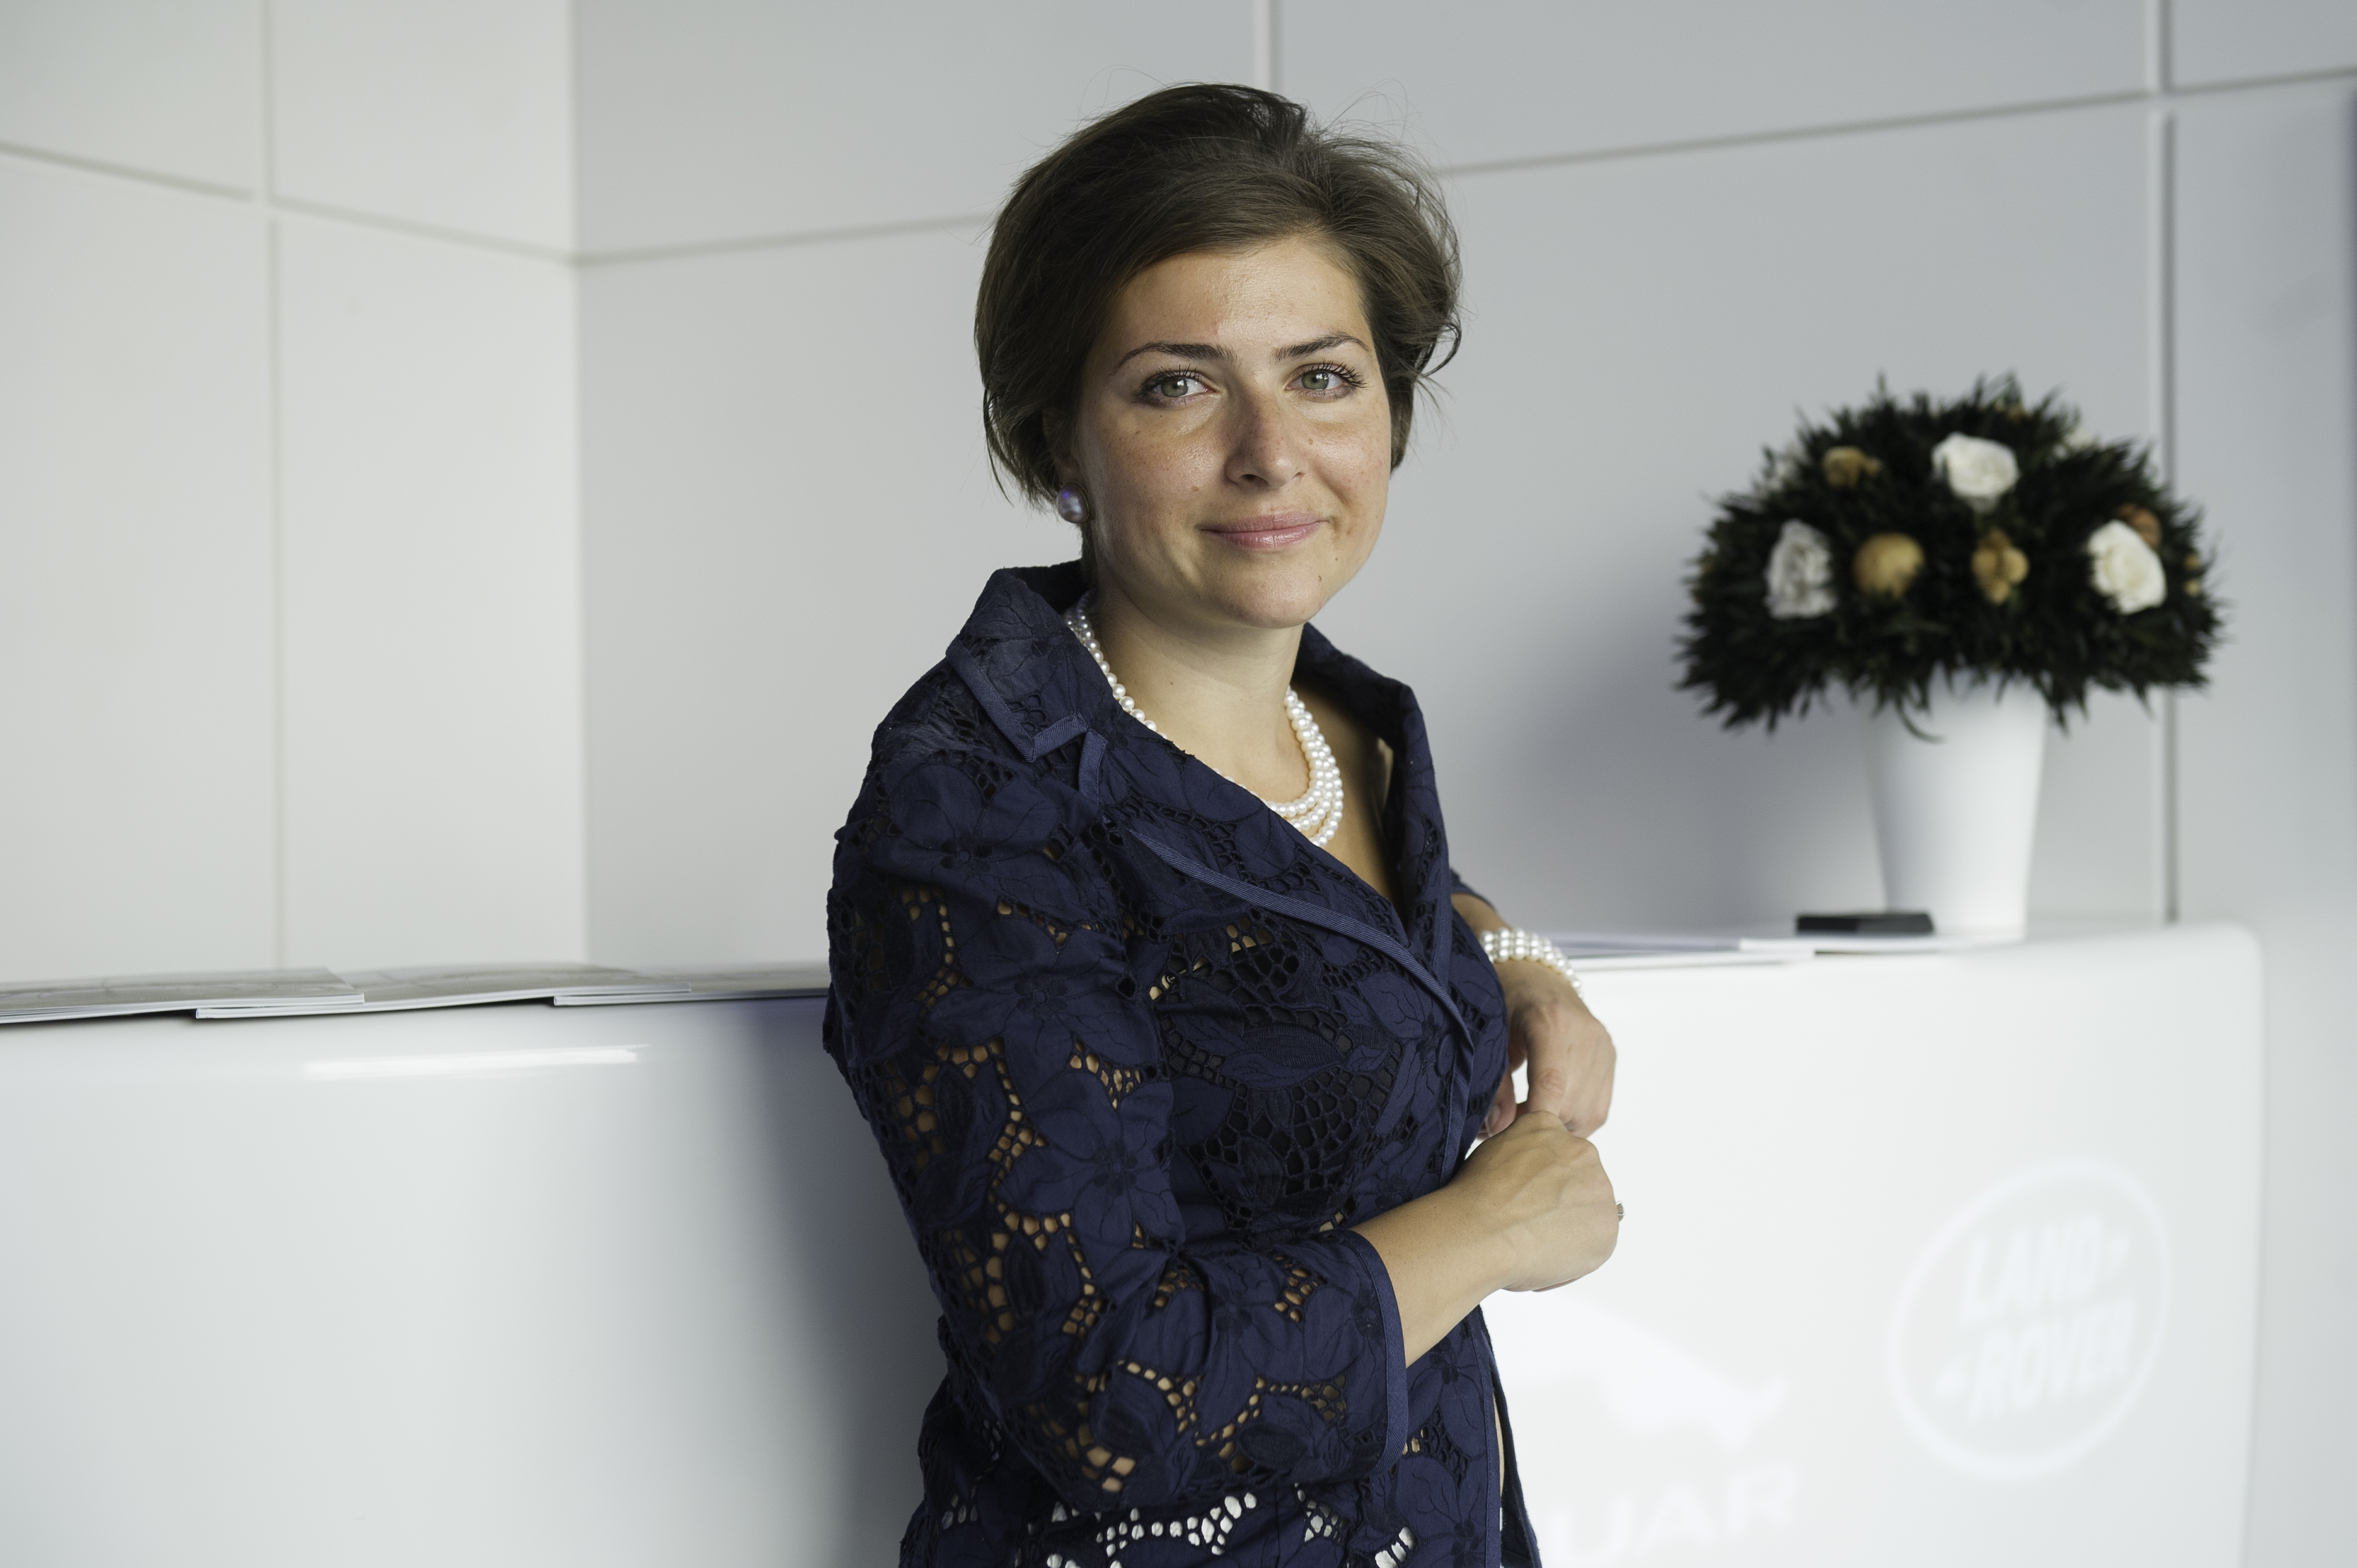 Елена Кравец - директор по маркетингу брендов Peugeot, Citroёn, Opel в России! 